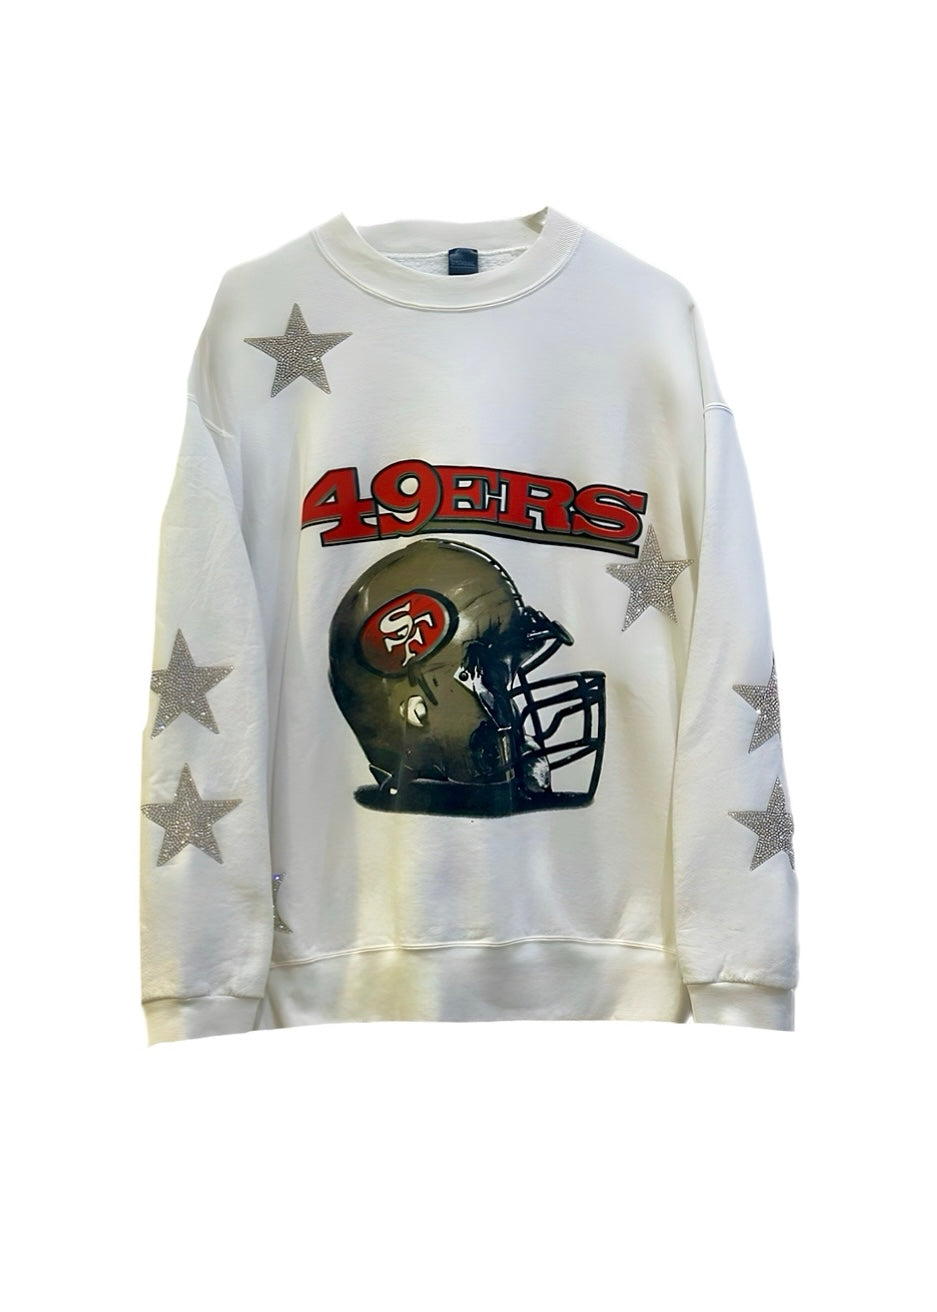 San Francisco 49ers, NFL One of a KIND Vintage Sweatshirt with All Over Crystal Star Design